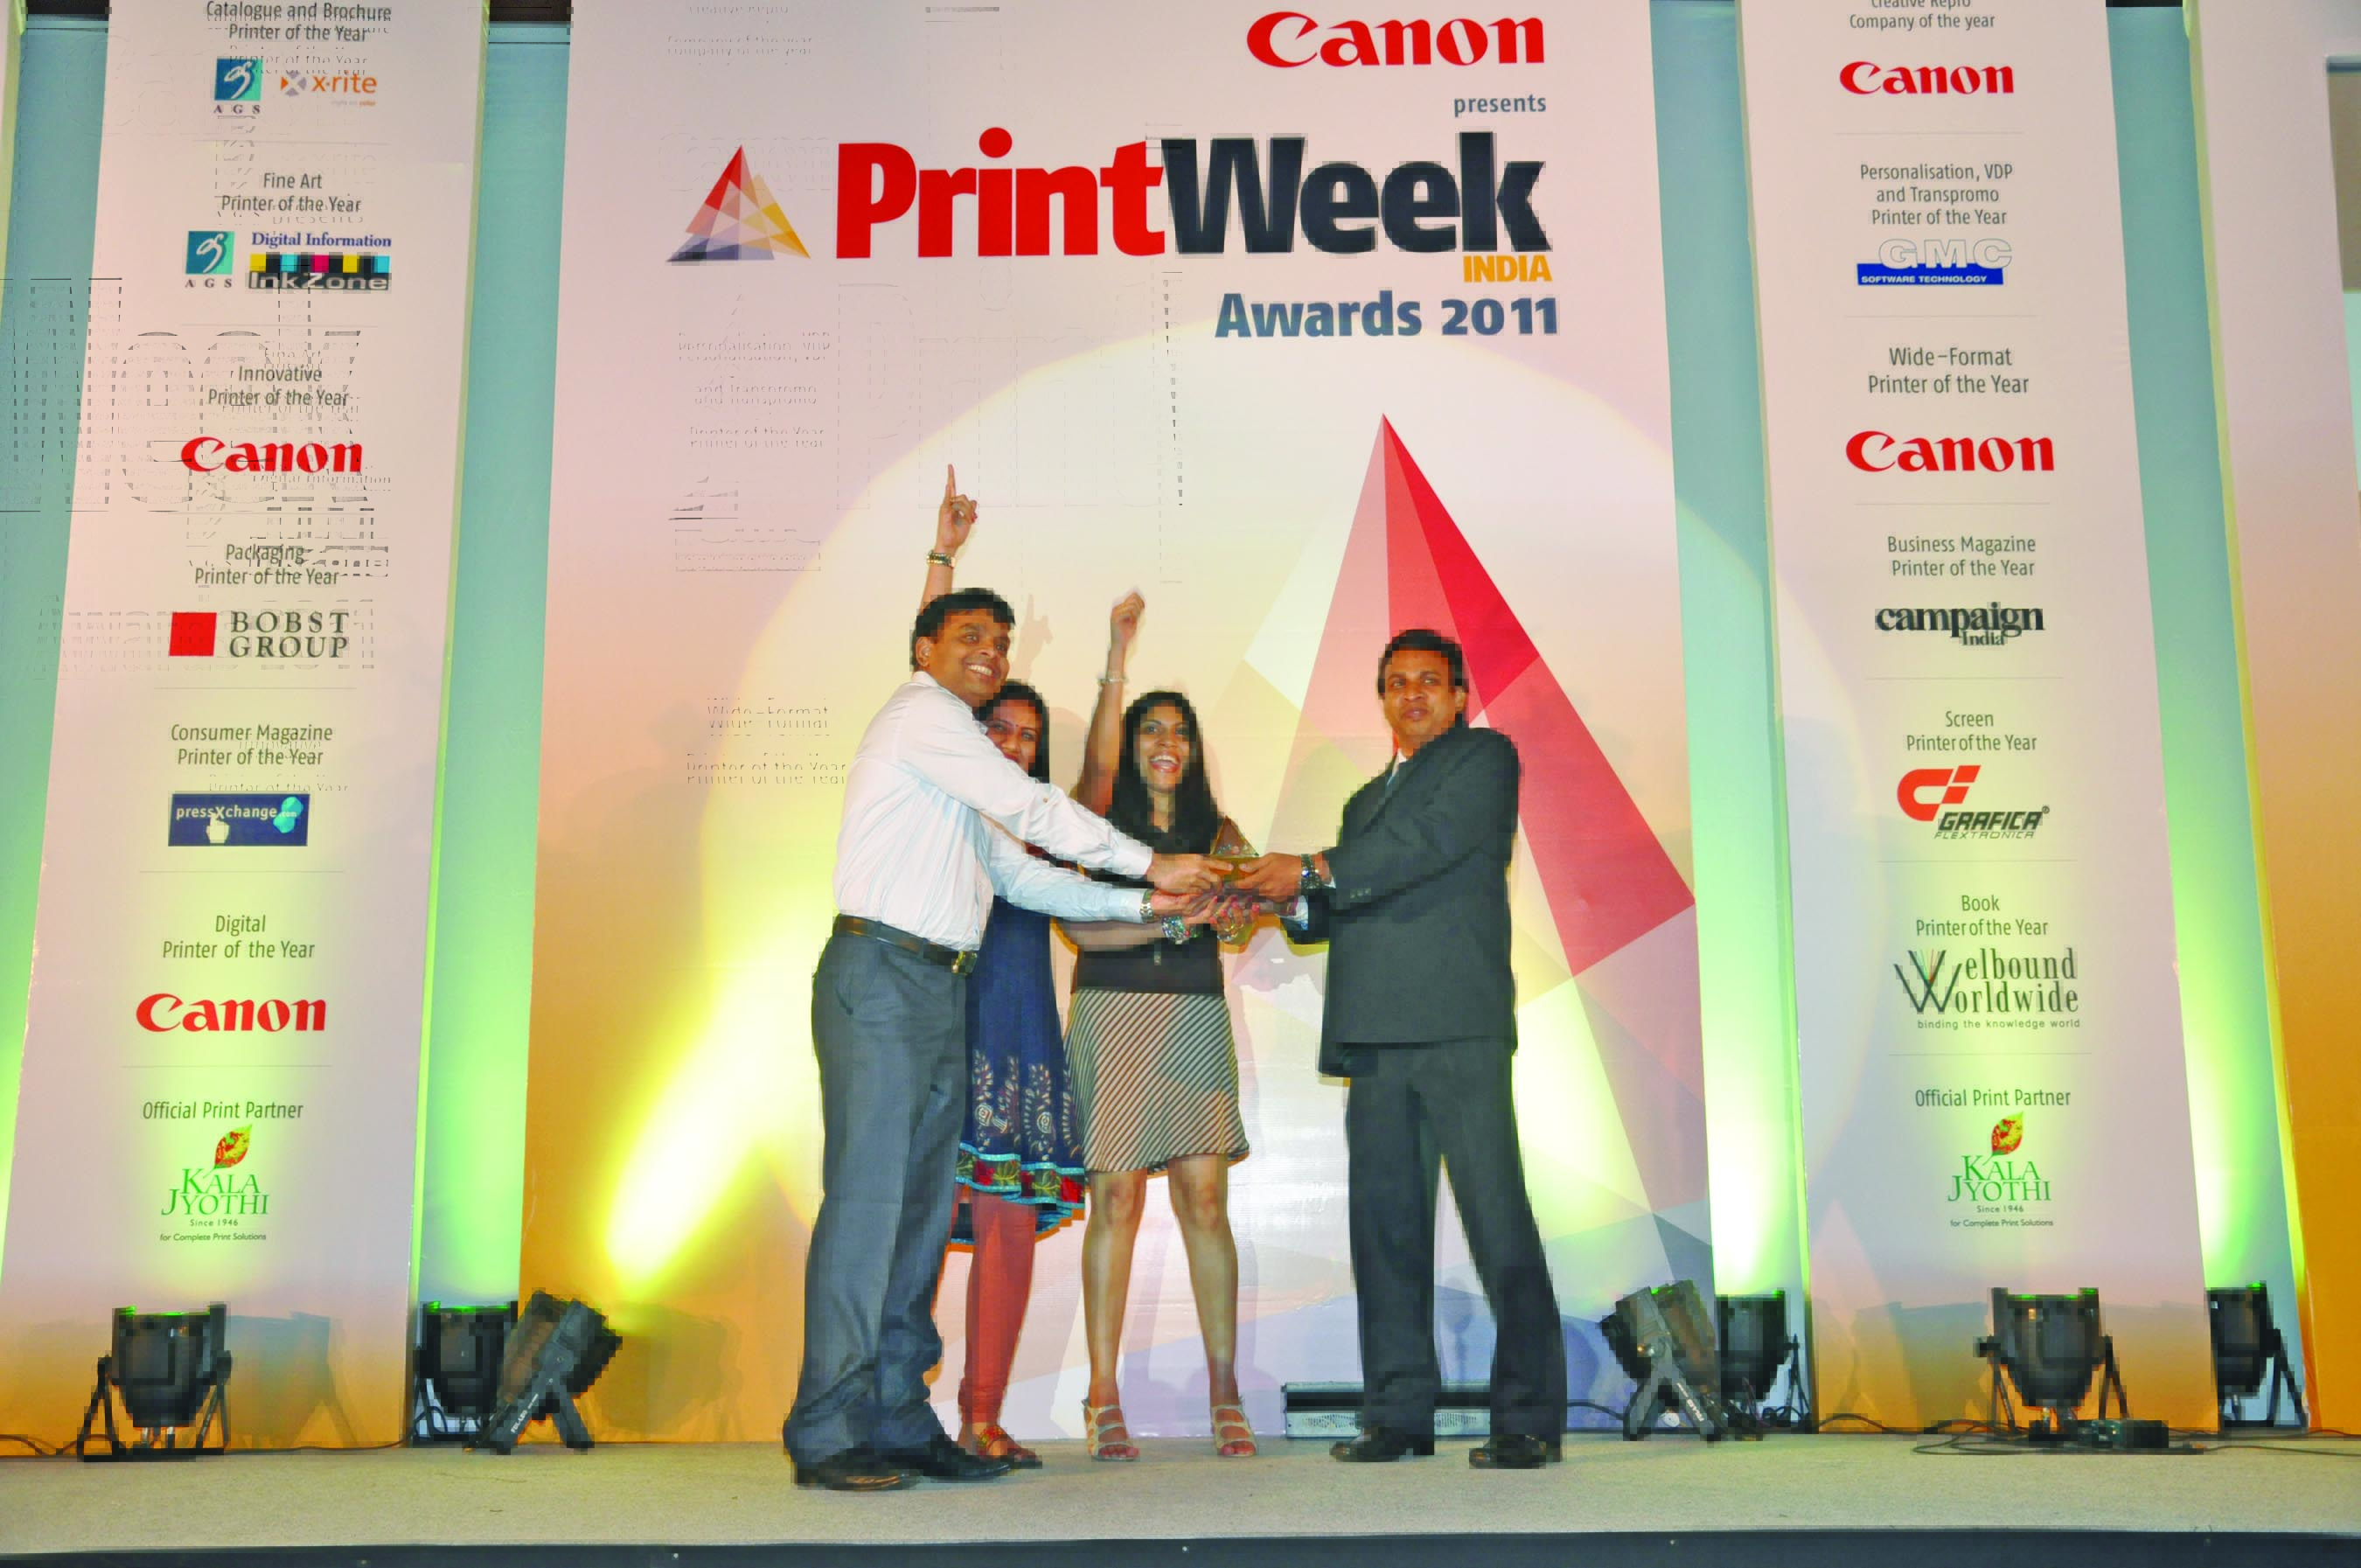 GMC and Welbound are PWI Award sponsors PrintWeekIndia